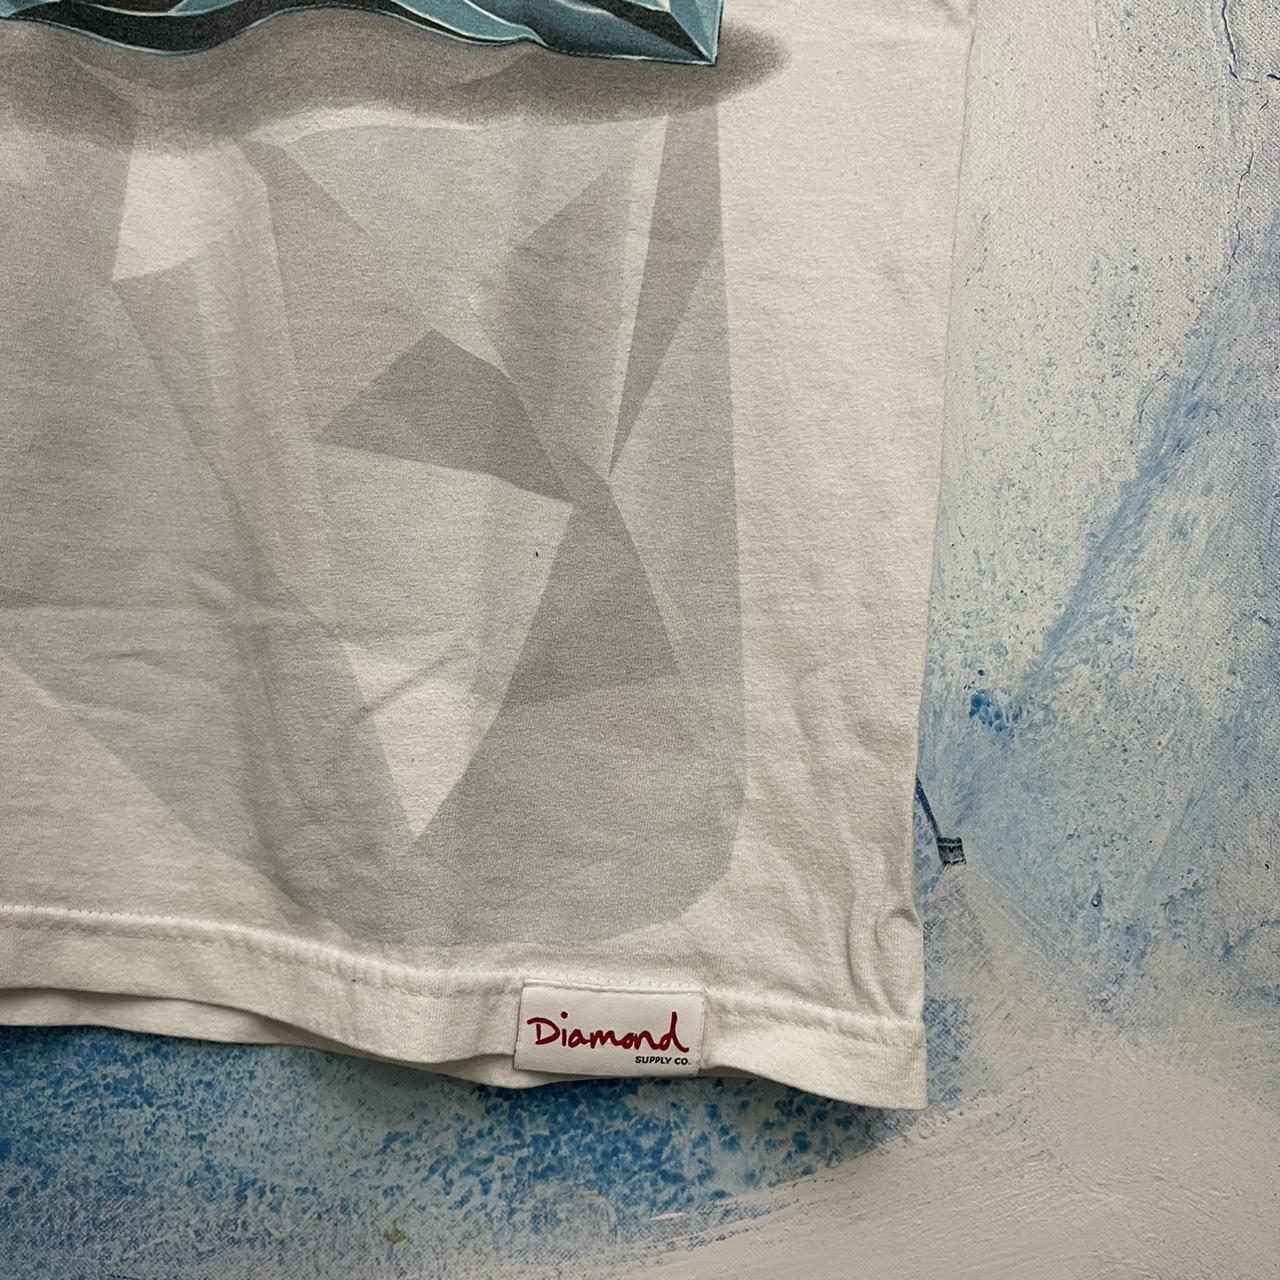 Diamond Supply Co. Men's White and Blue T-shirt (3)